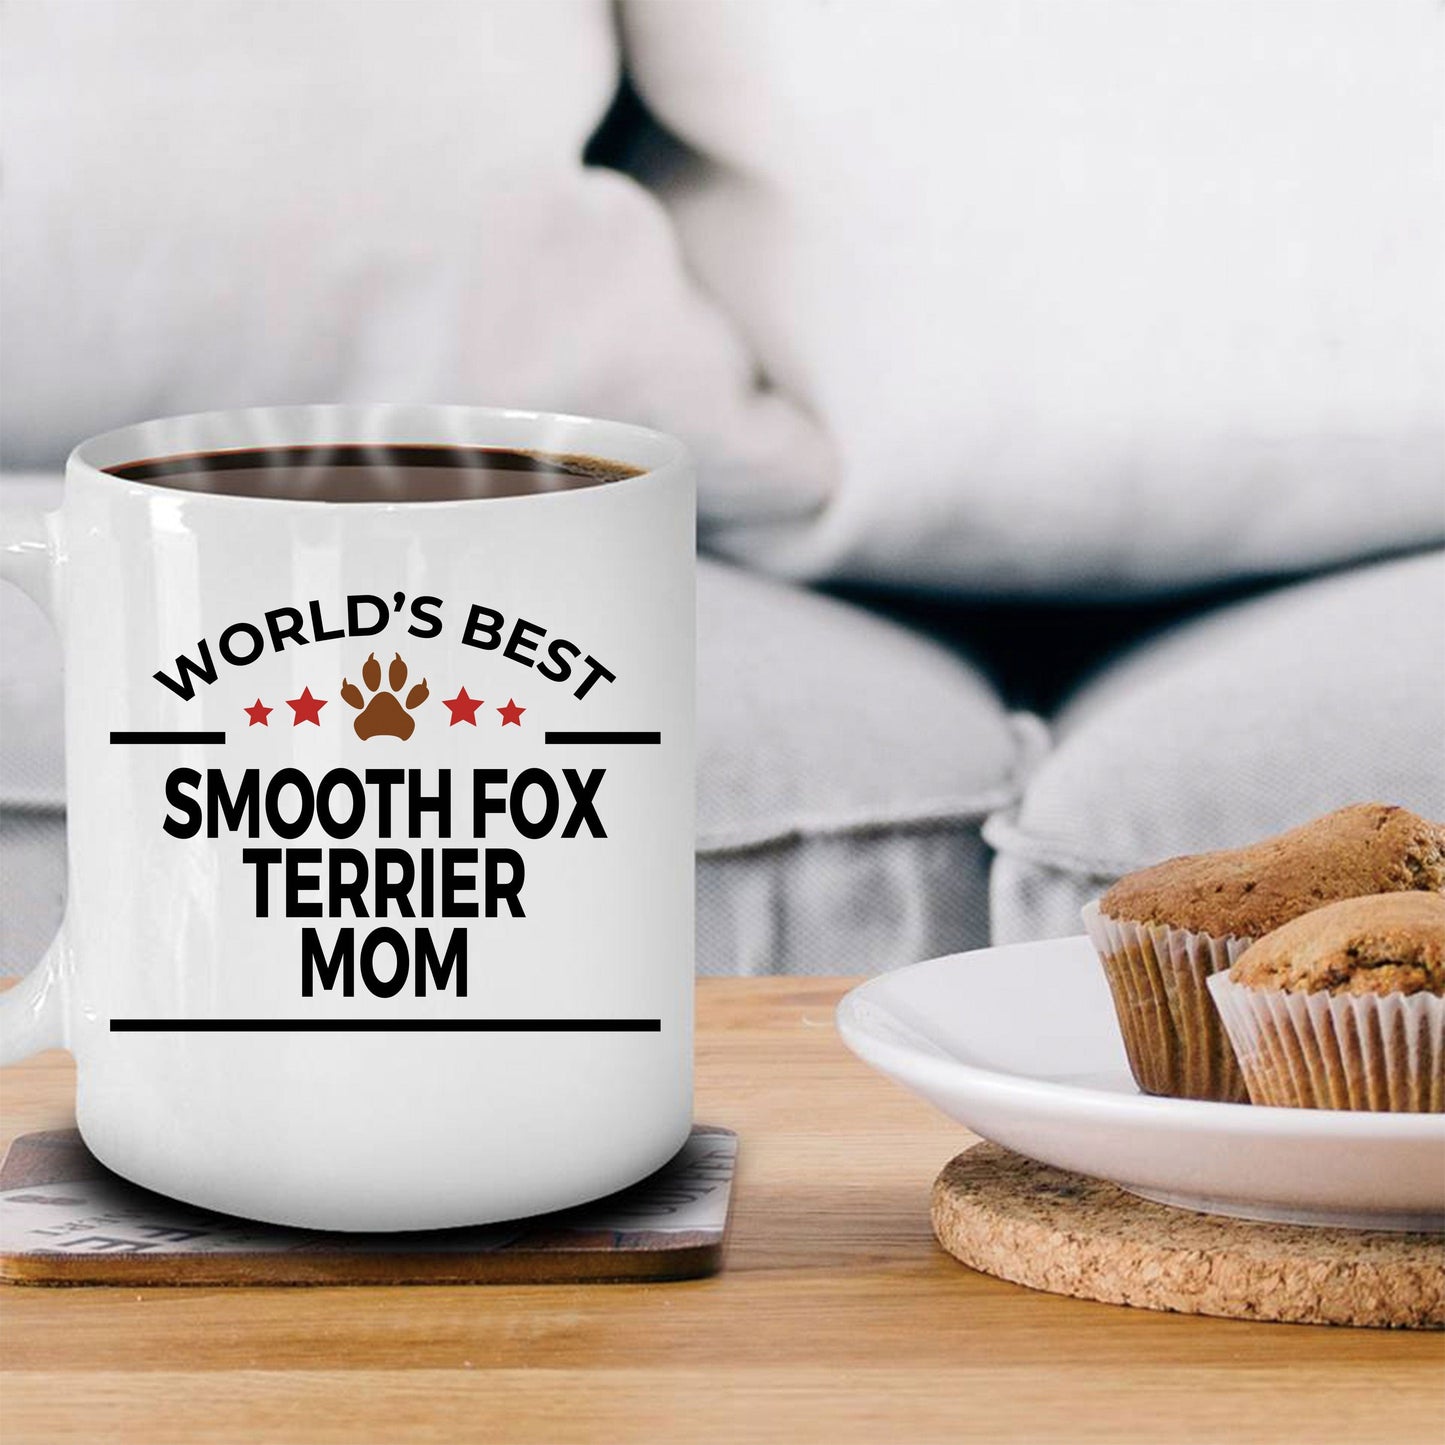 Smooth Fox Terrier Dog Lover Gift World's Best Mom Birthday Mother's Day White Ceramic Coffee Mug